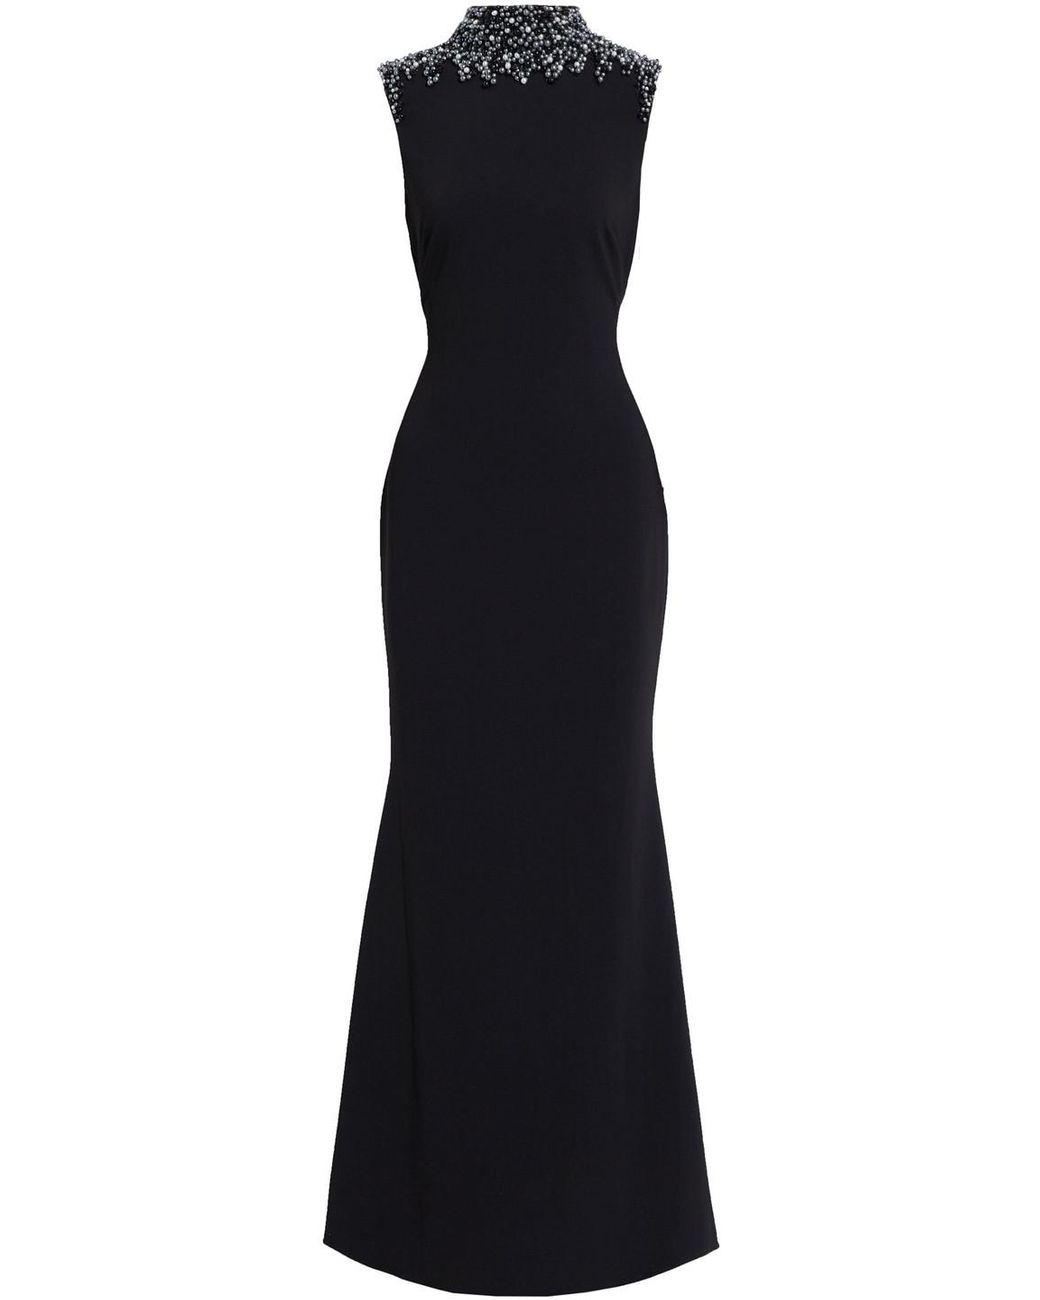 Badgley Mischka Embellished Fluted Crepe Gown in Black | Lyst